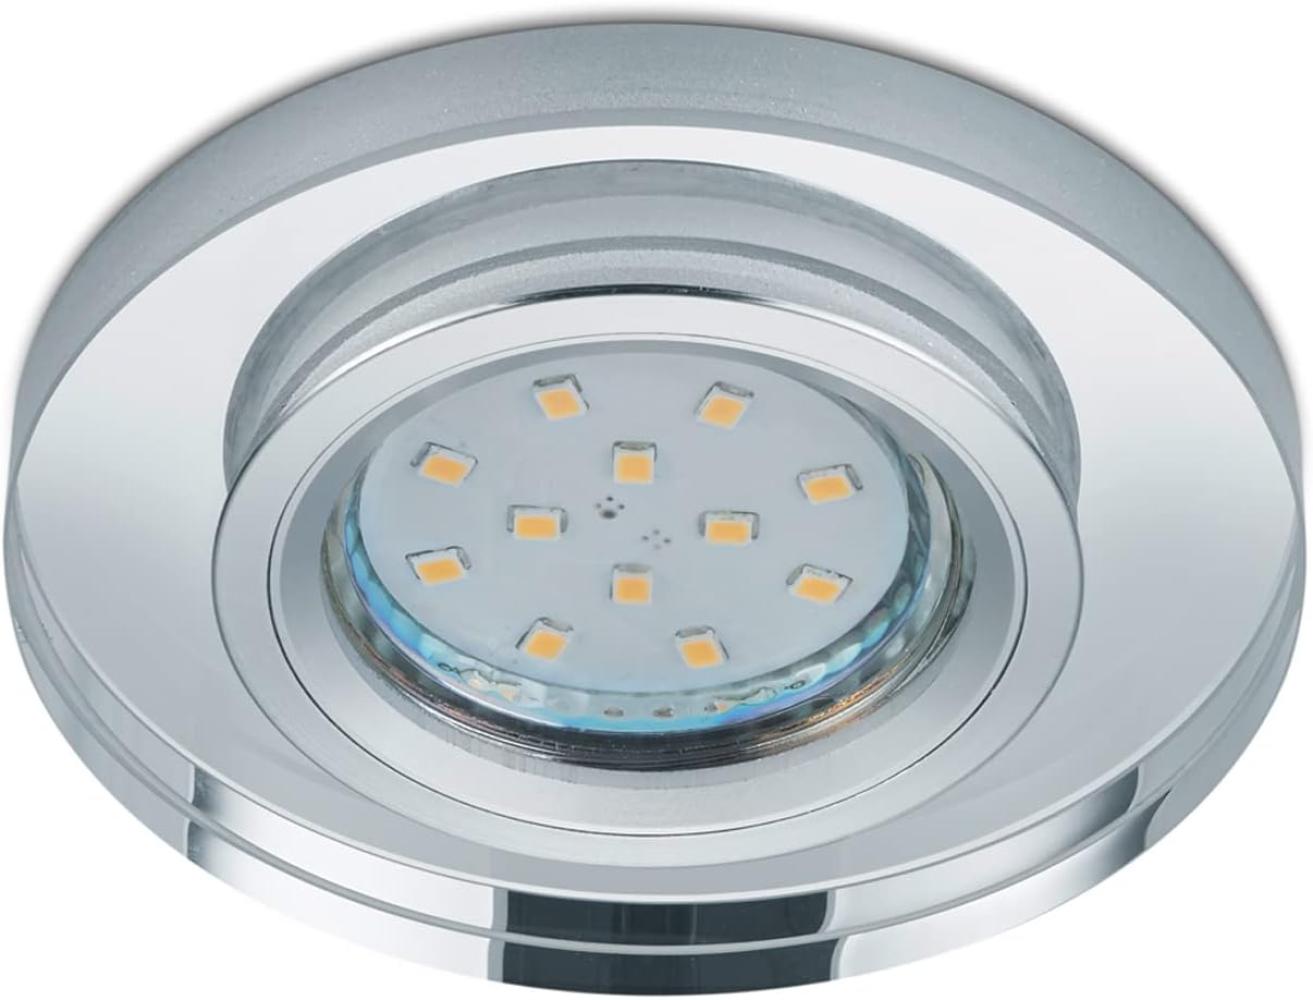 Runder LED Deckeneinbaustrahler in Silber Chrom mit Kristallglas Ø 9cm Bild 1